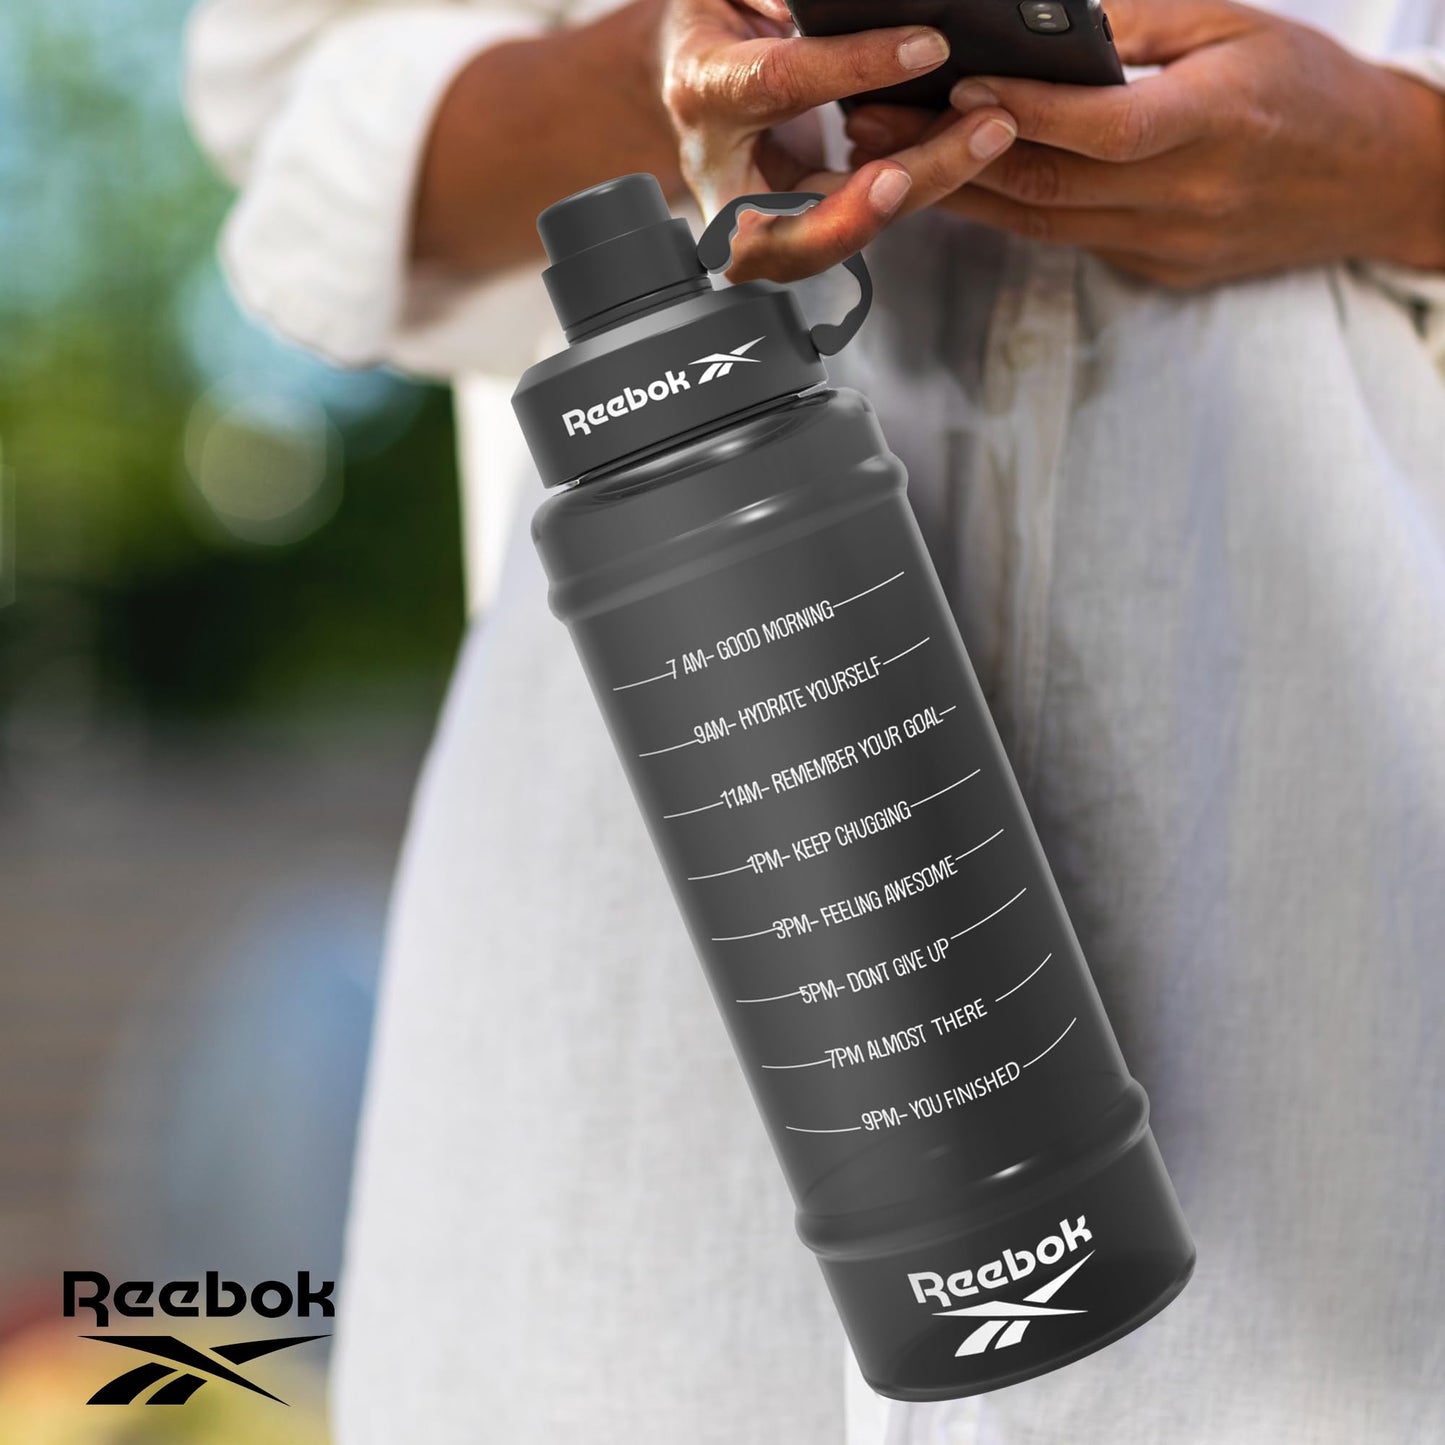 Reebok Lifestyle Motivational Sports Water Bottle - 67 oz